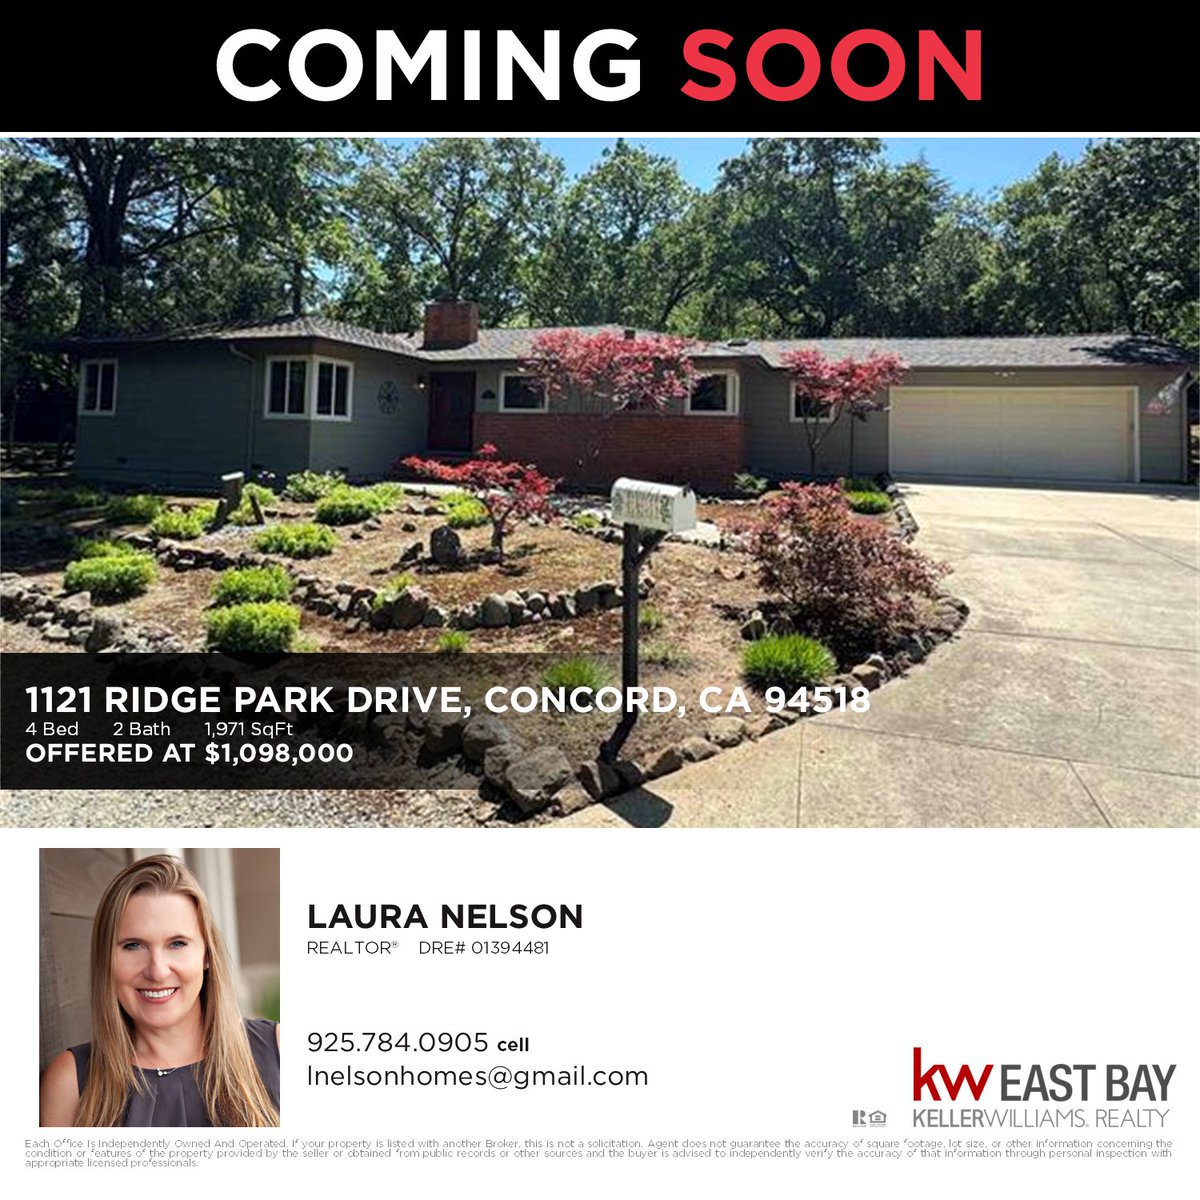 1121 Ridge Park Drive, Concord, CA 94518 - Coming Soon from Laura Nelson!

#kellerwilliams #bayarearealestate #bayarearealtor